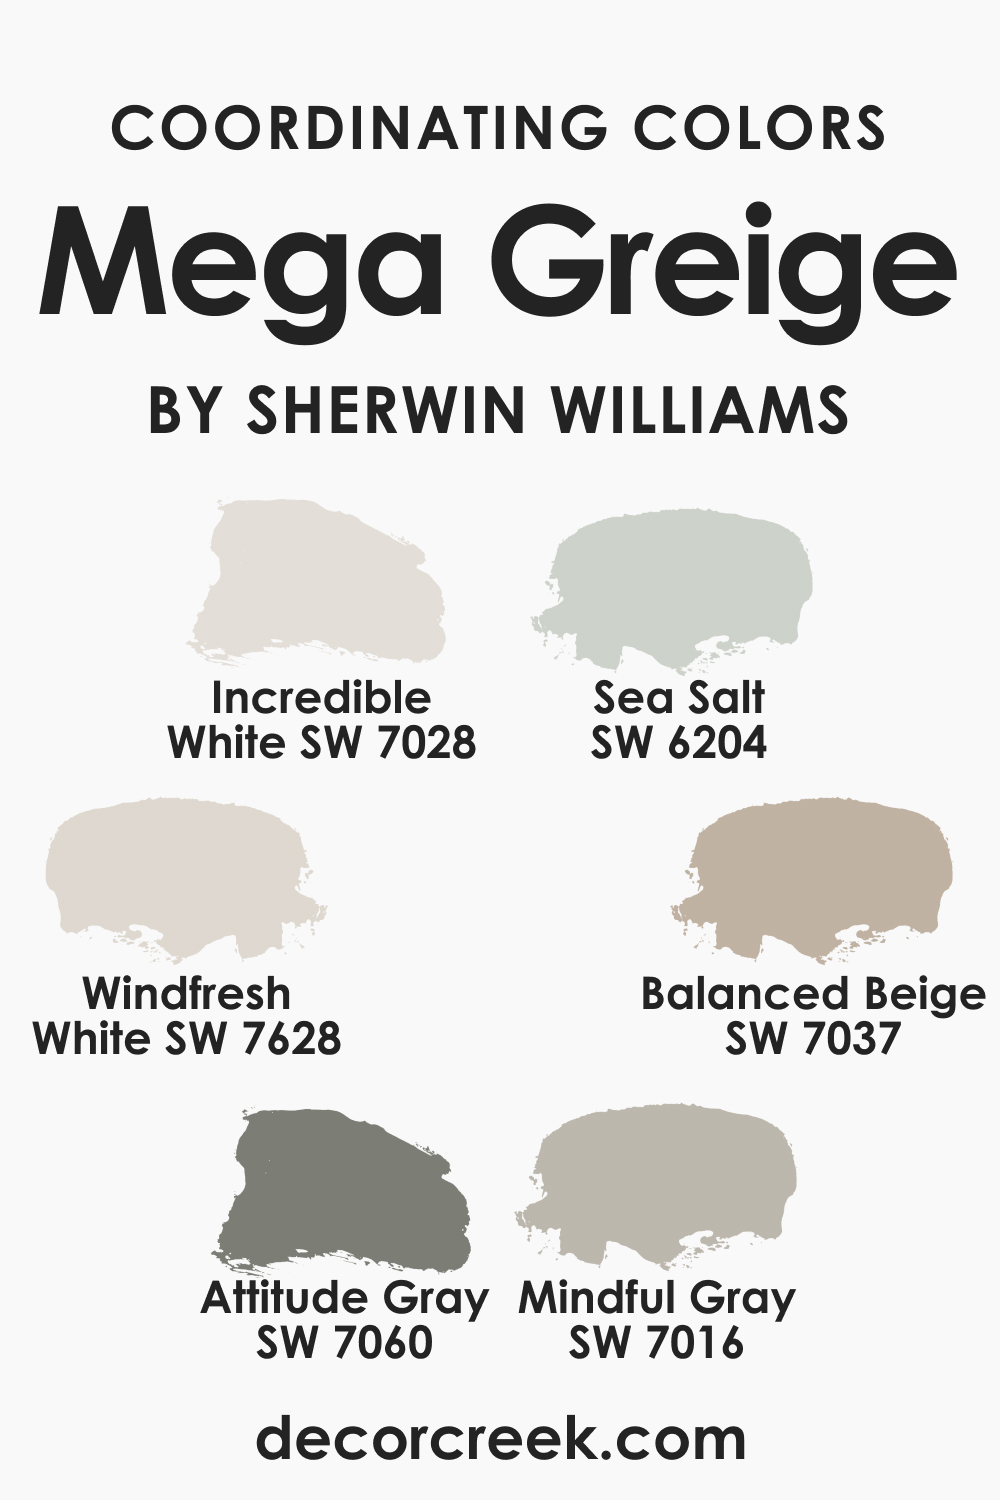 Coordinating Colors of SW 7031 Mega Greige